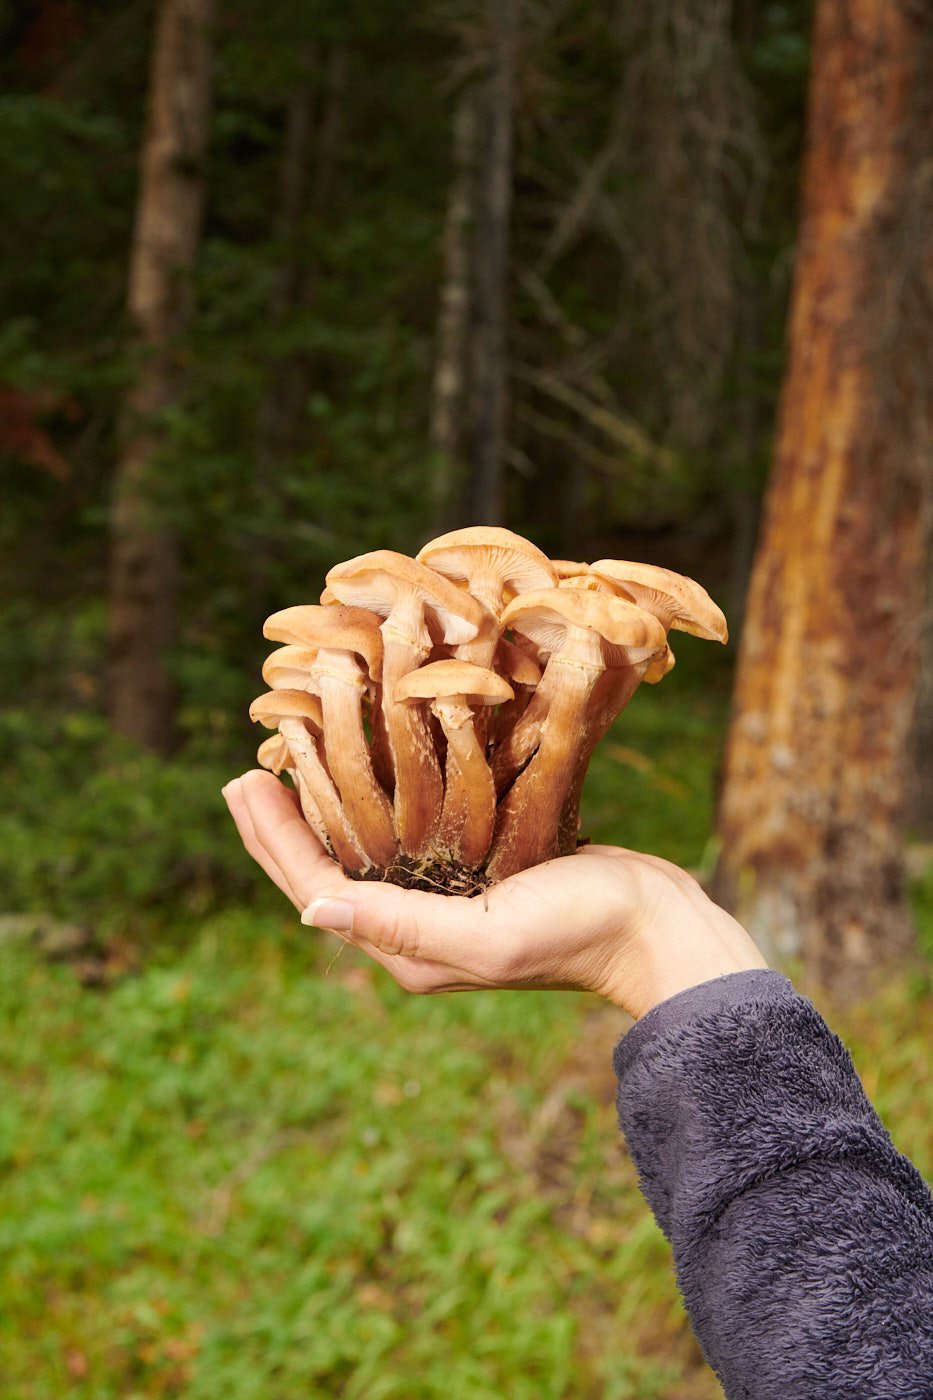 Telluride Mushroom Festival for Travel + Leisure - All Photos Theo Stroomer ©